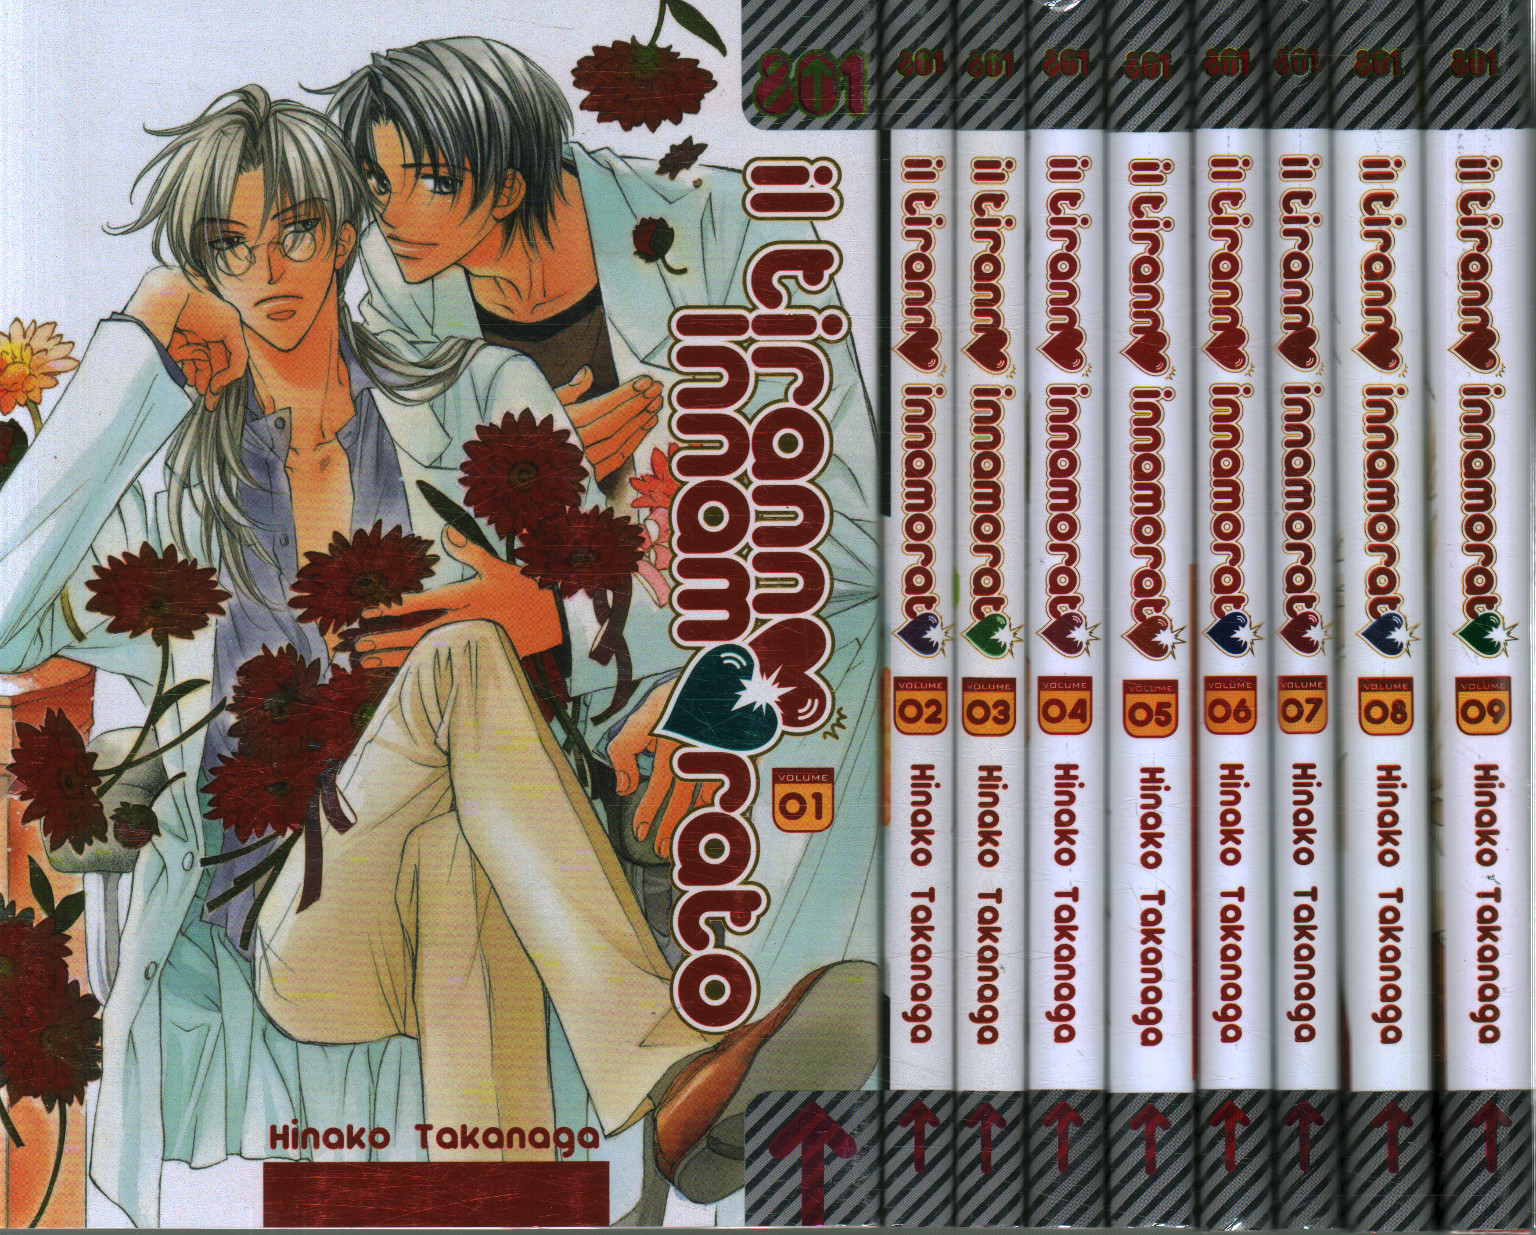 The tyrant in love. Complete series (9 volumes), Hinako Takanaga